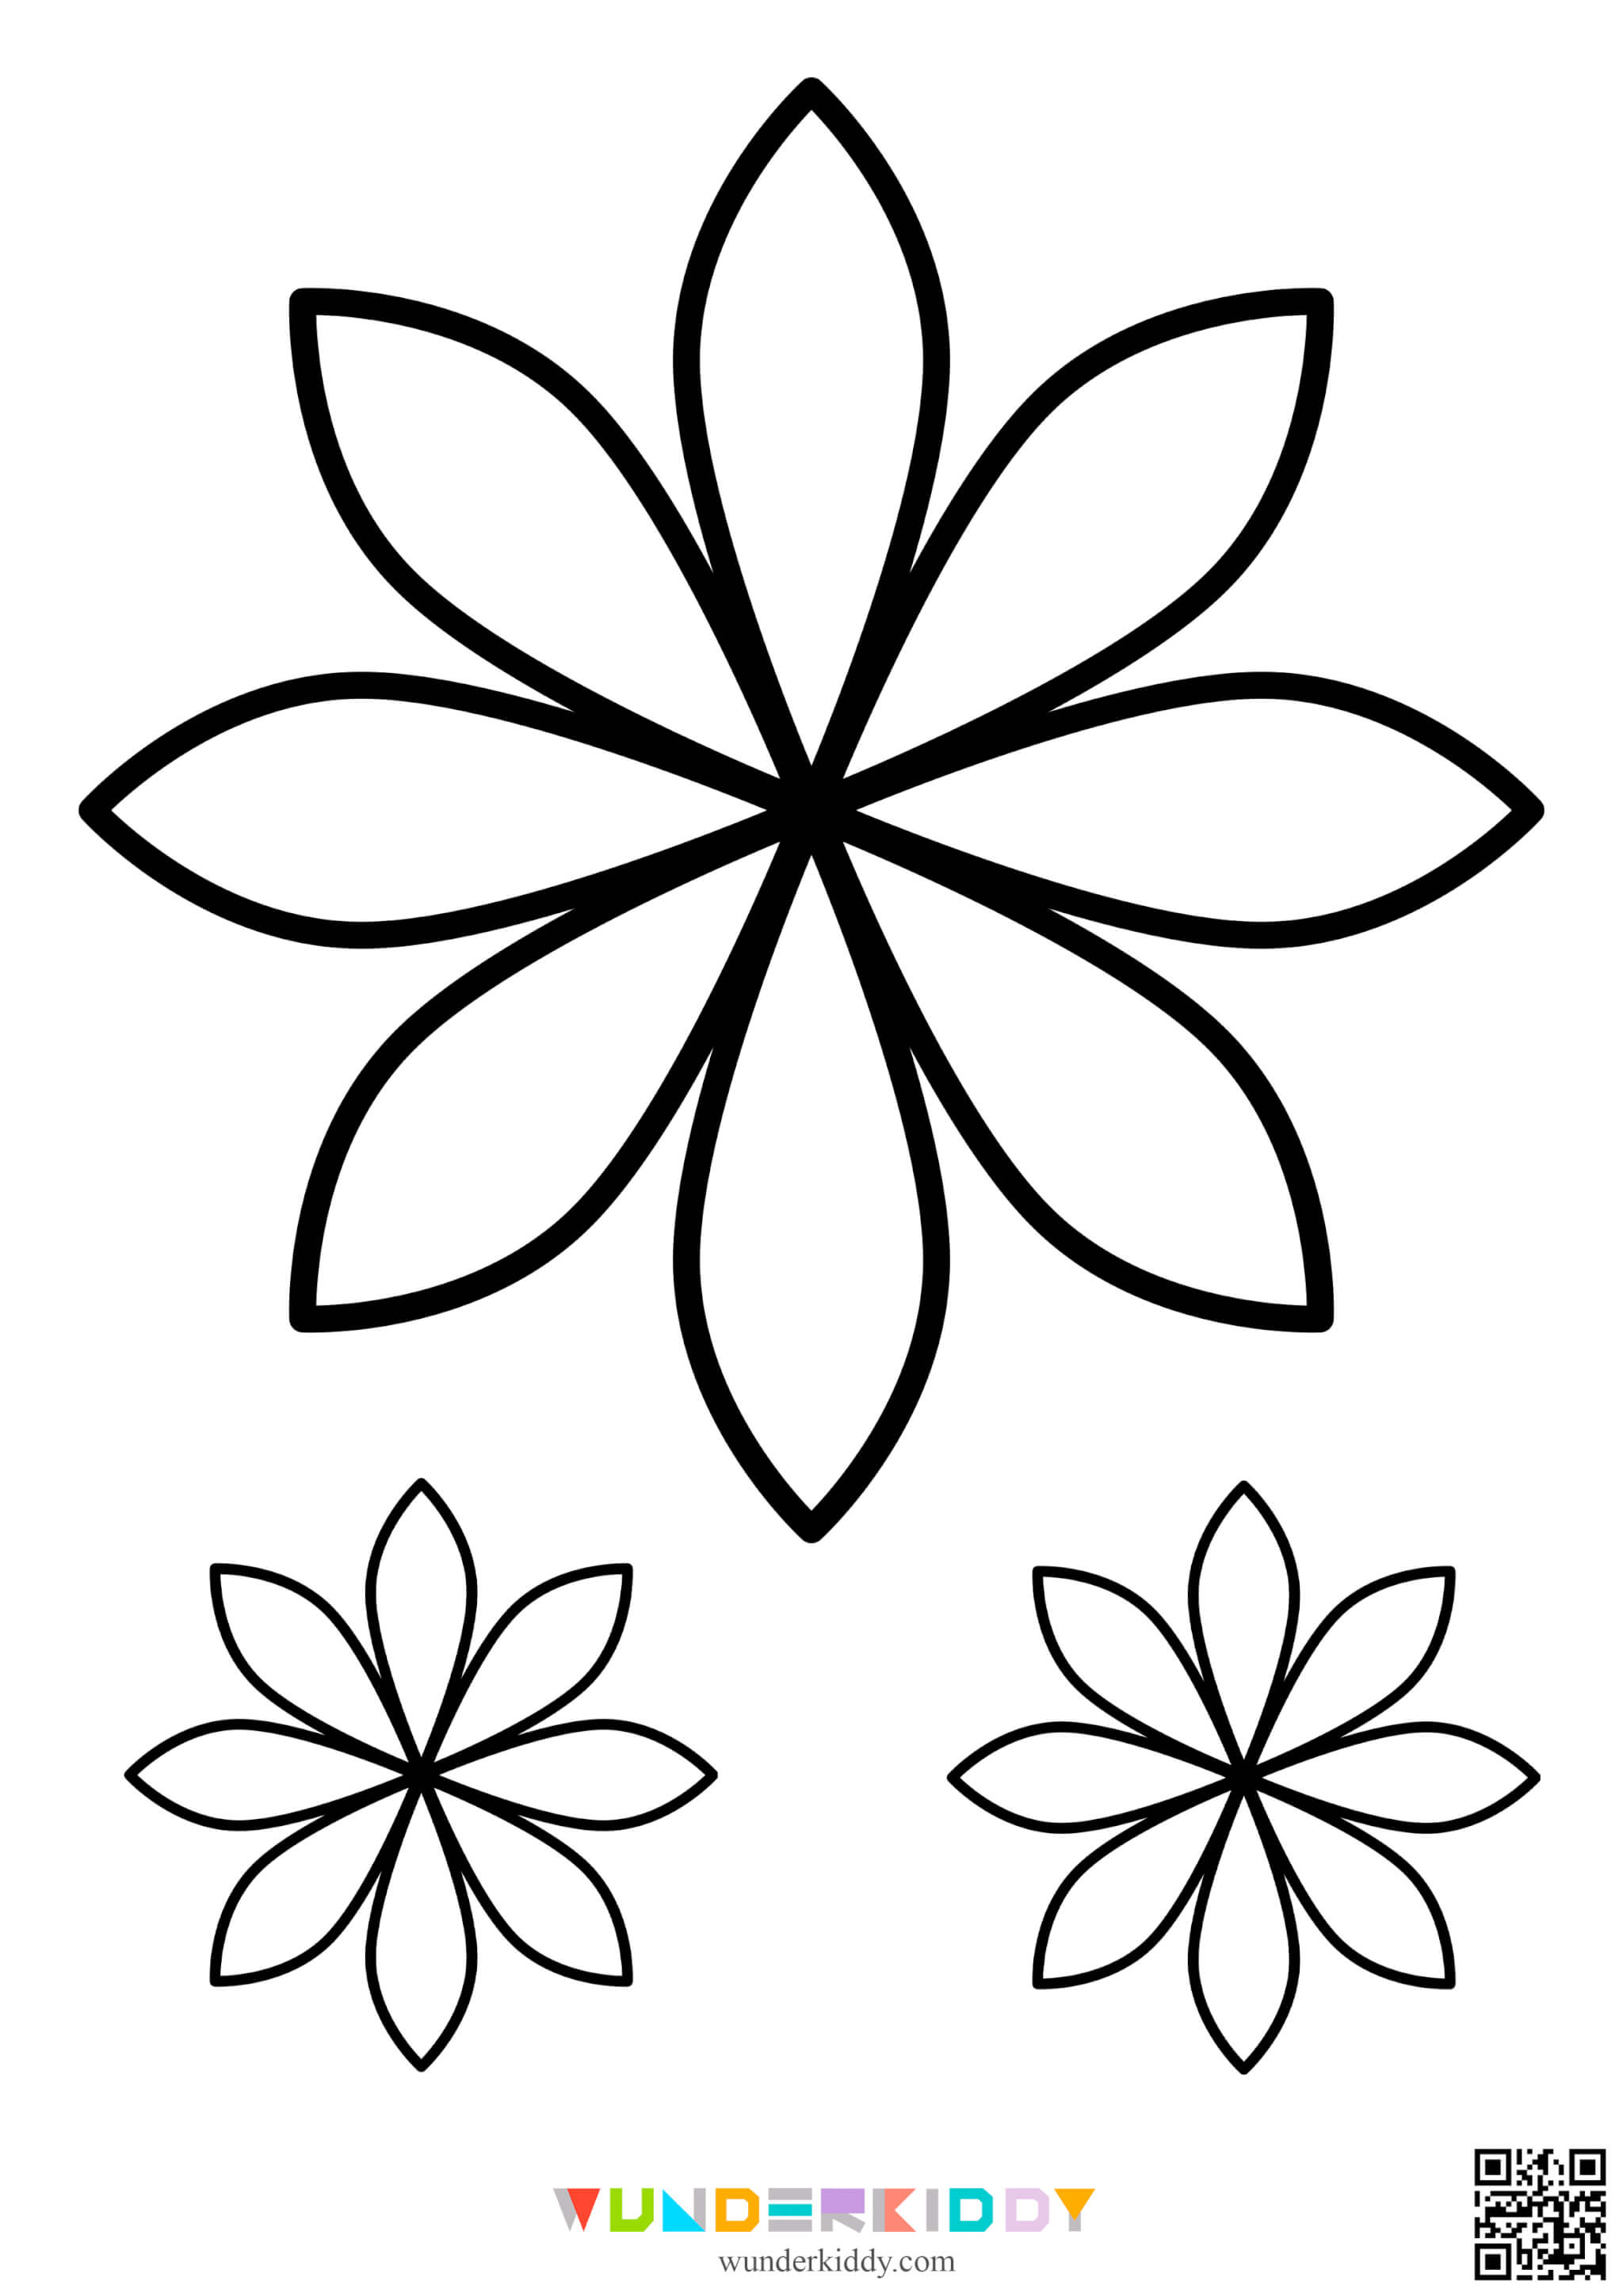 Simple Flower Templates - Image 6